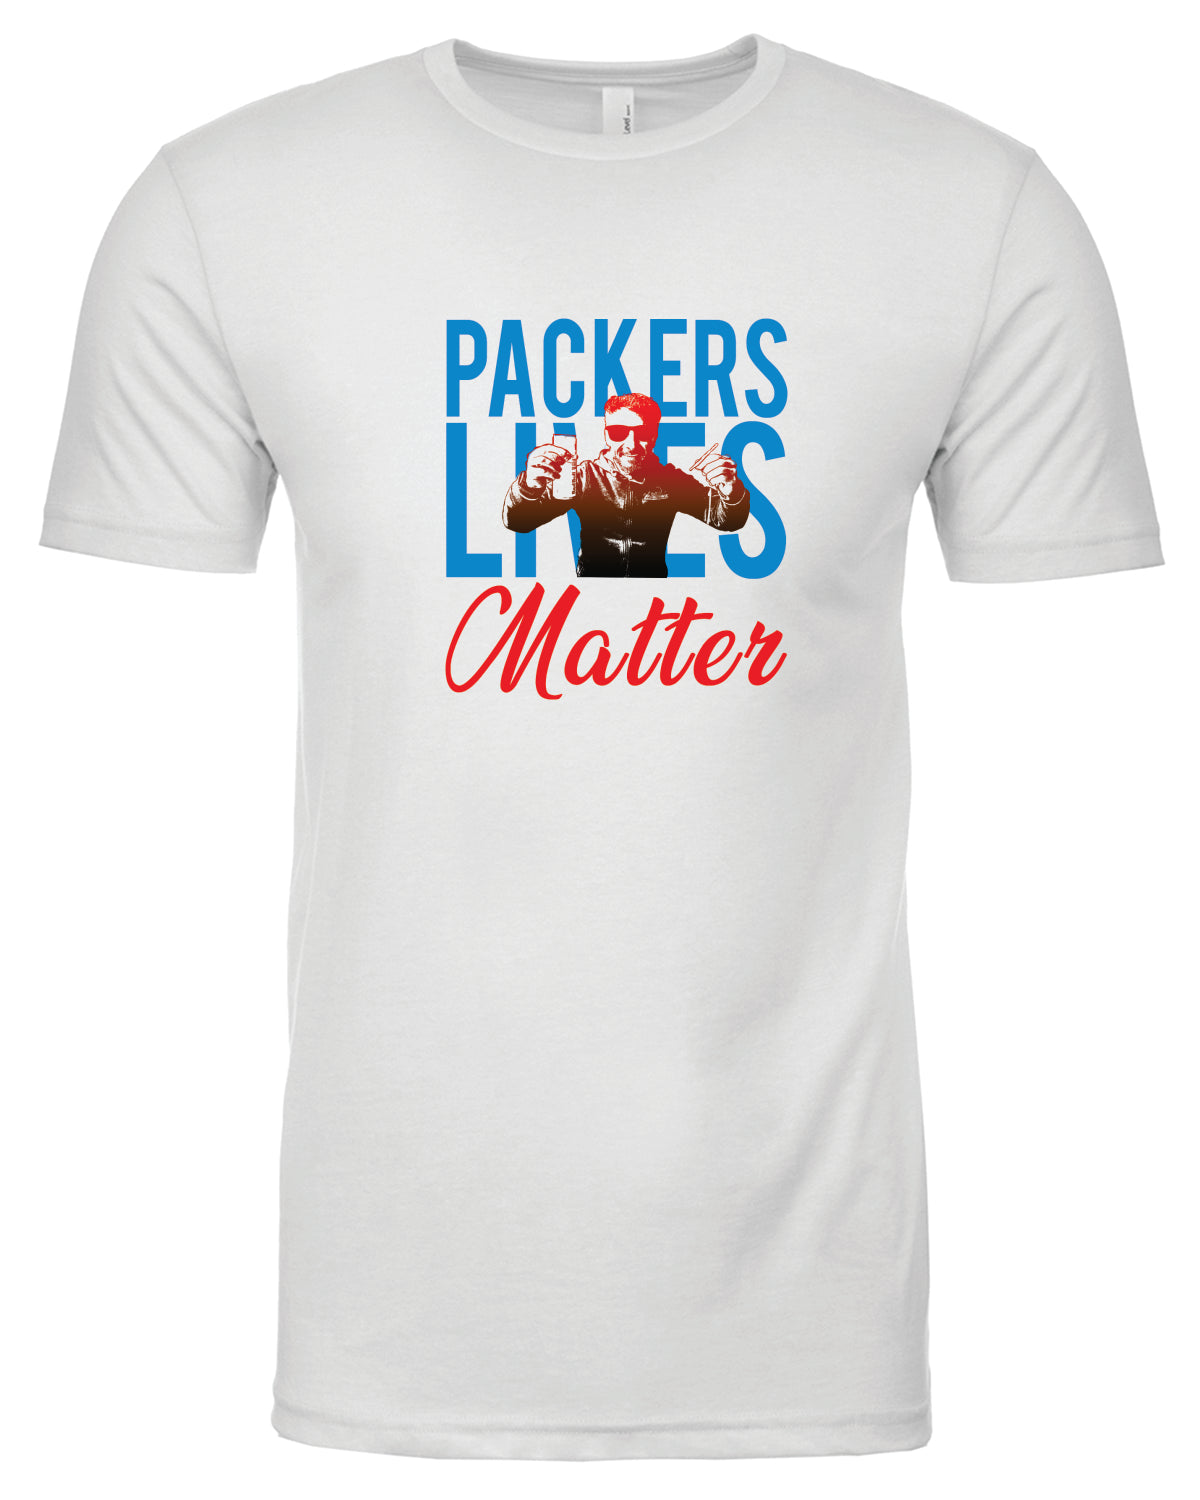 Packers lives Matter